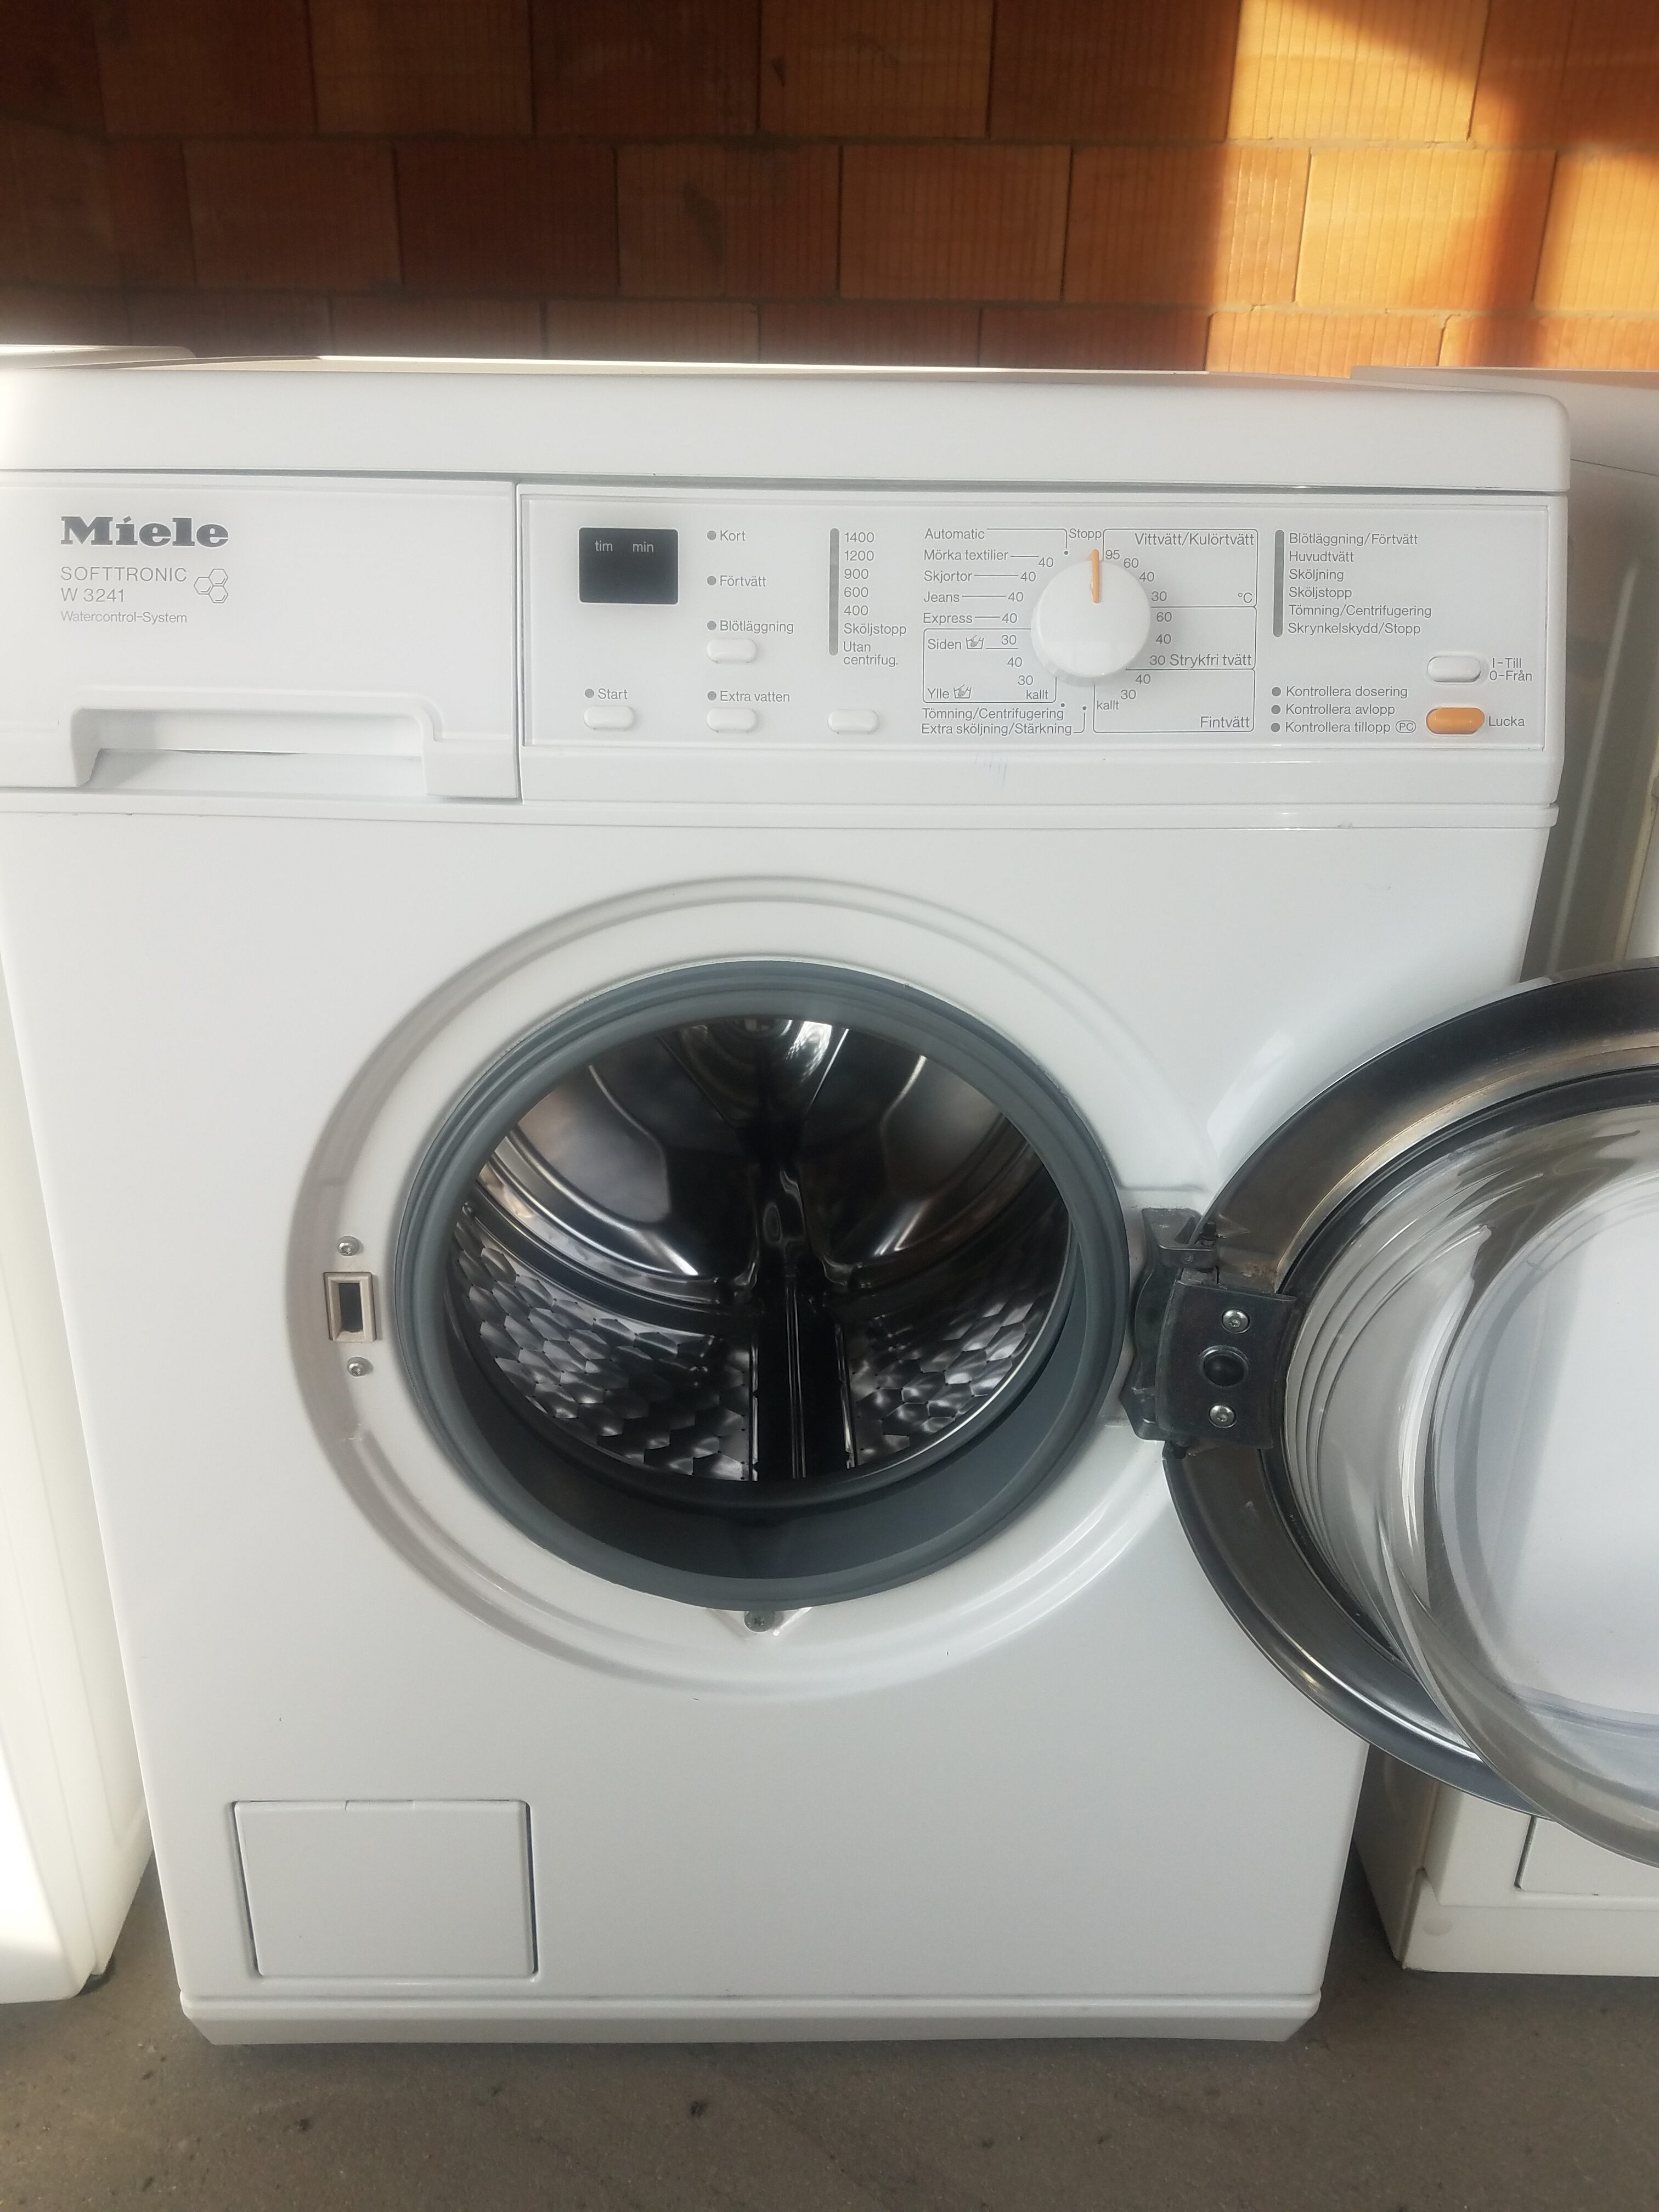 Miele w3241 washing machine Washing machines, dishwashers and dryers